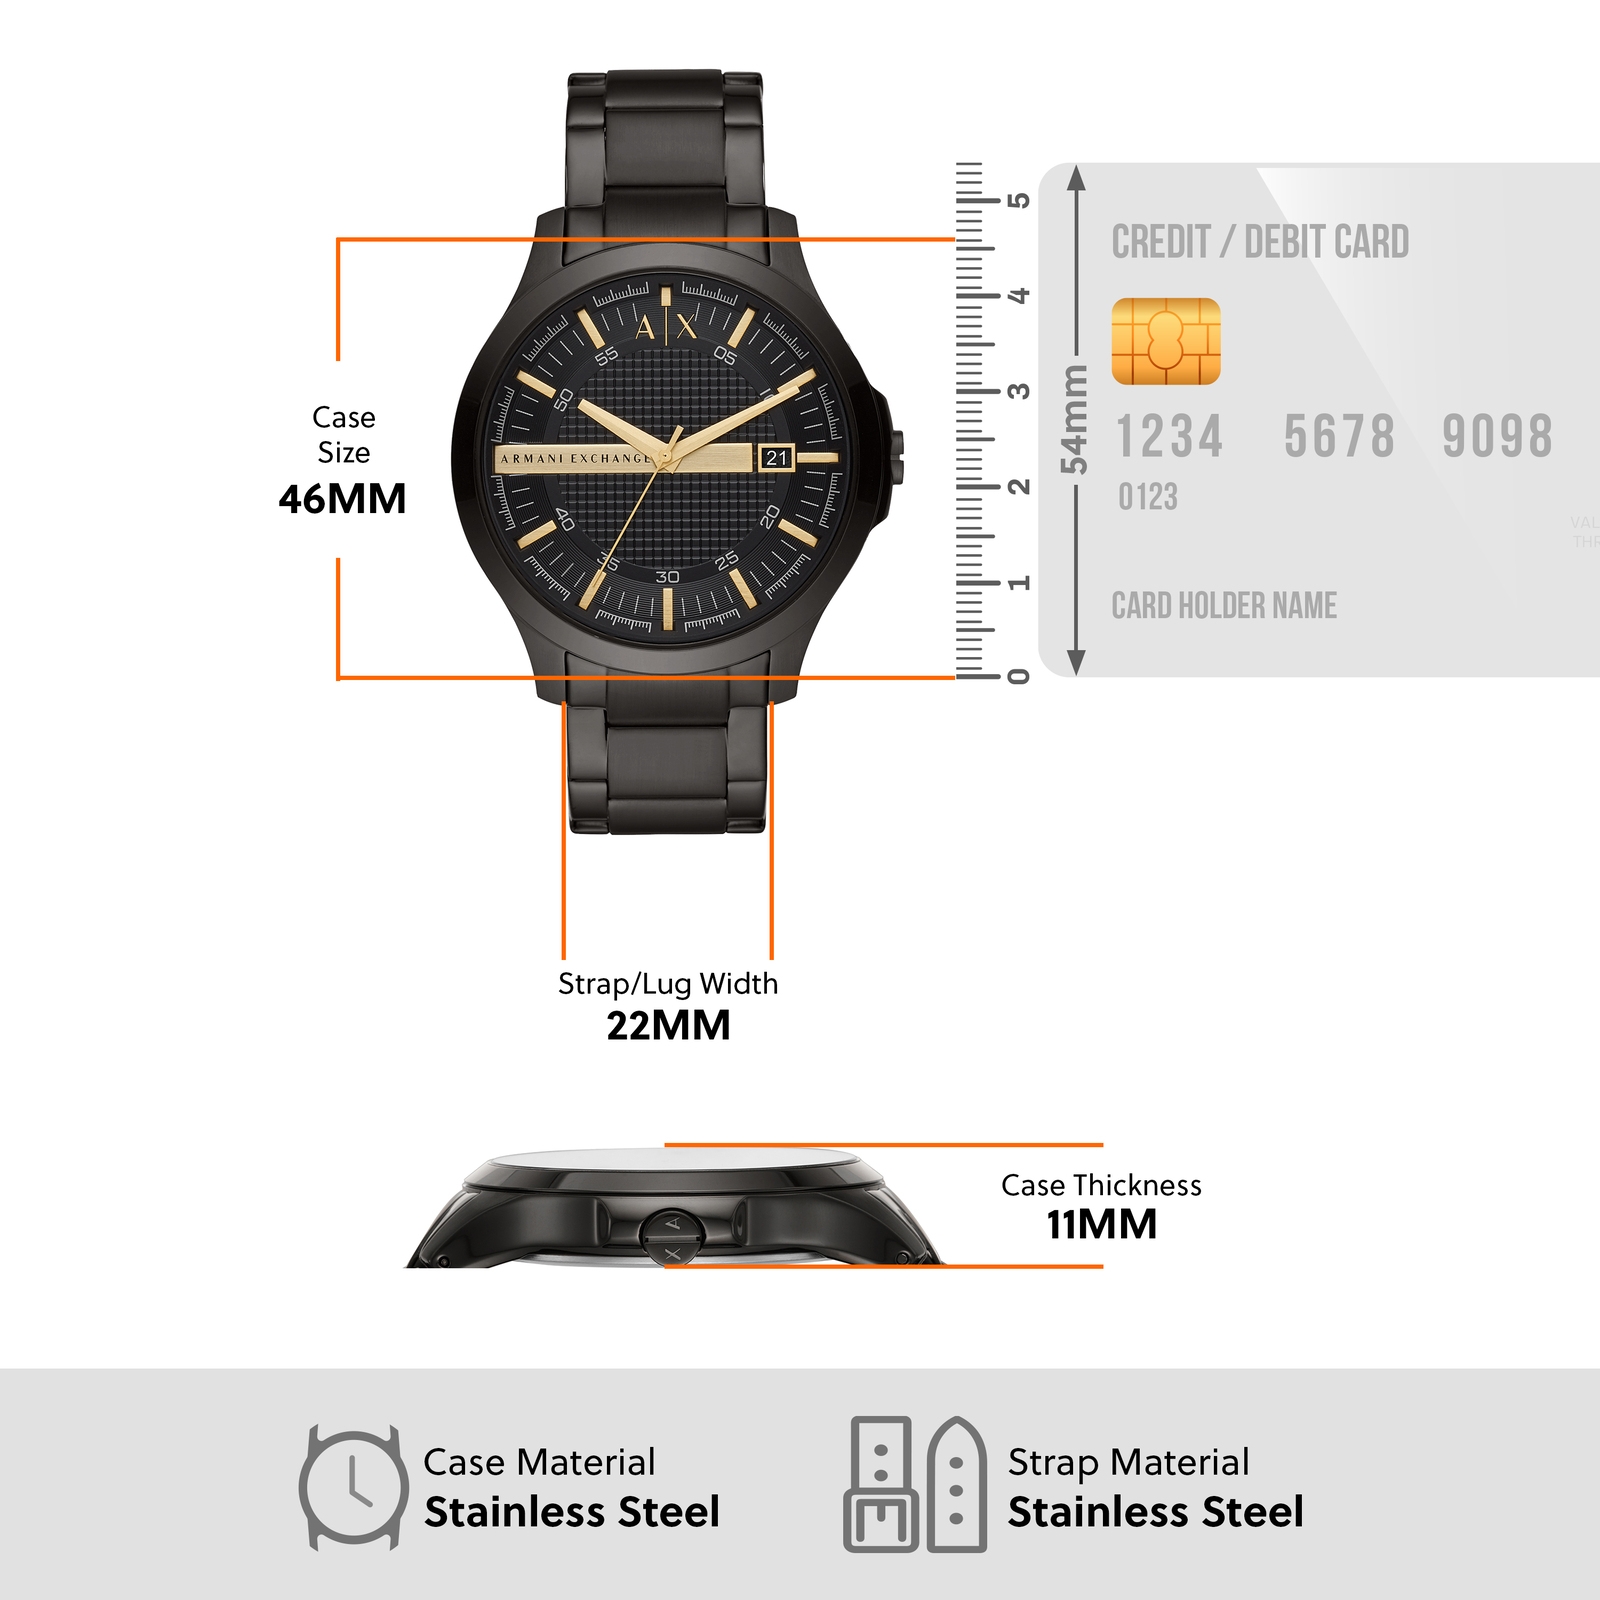 Armani Exchange Black Watch AX2413